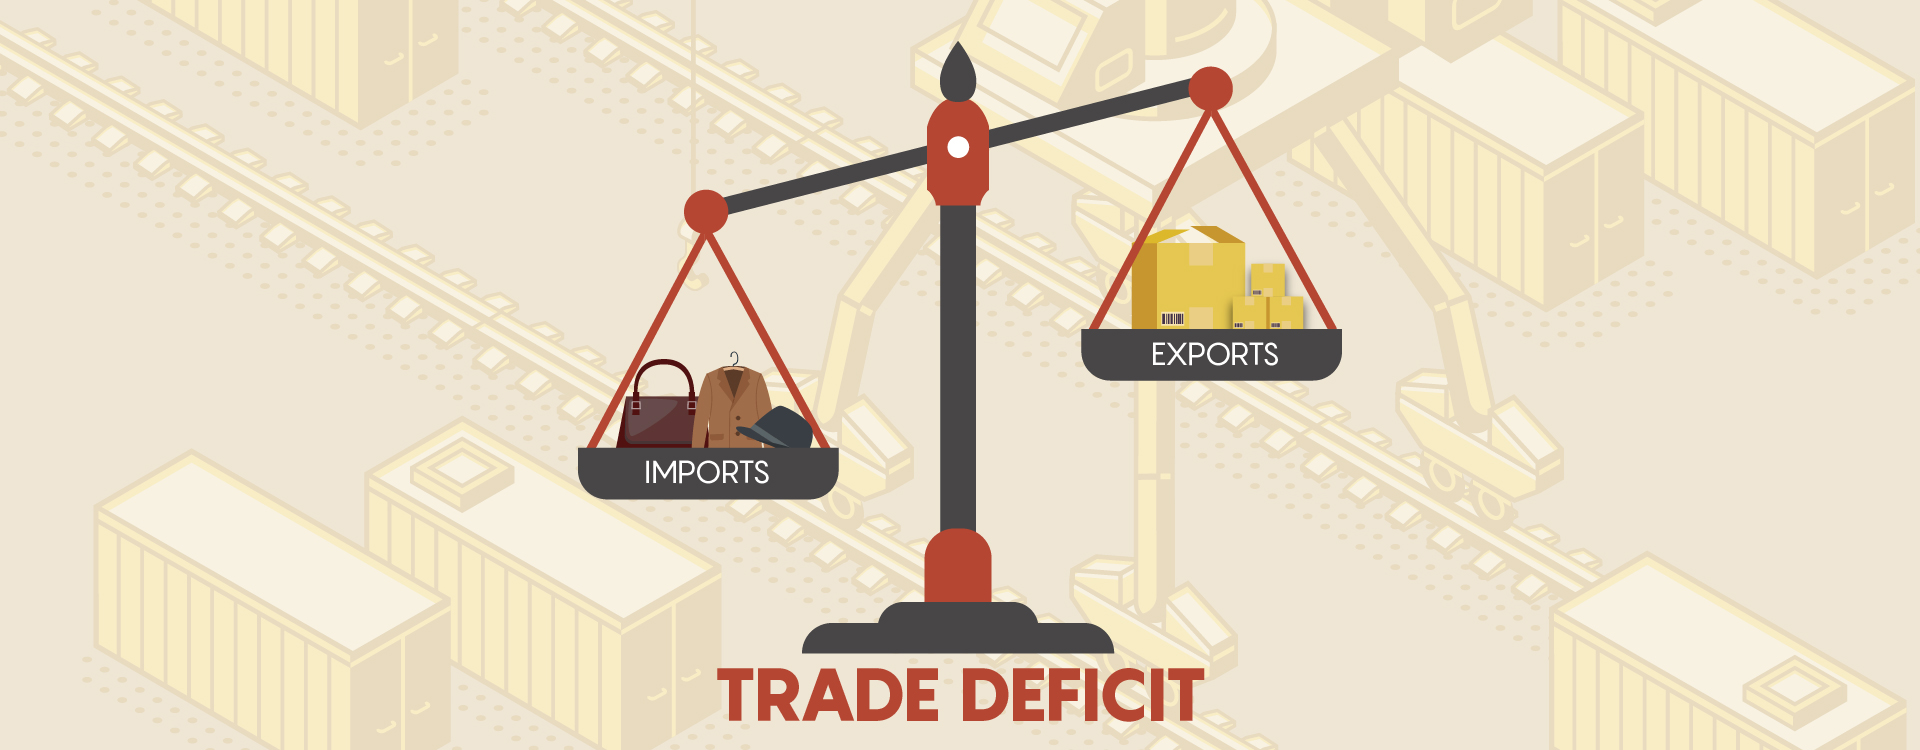 Trade Deficit - Understanding the basic concept